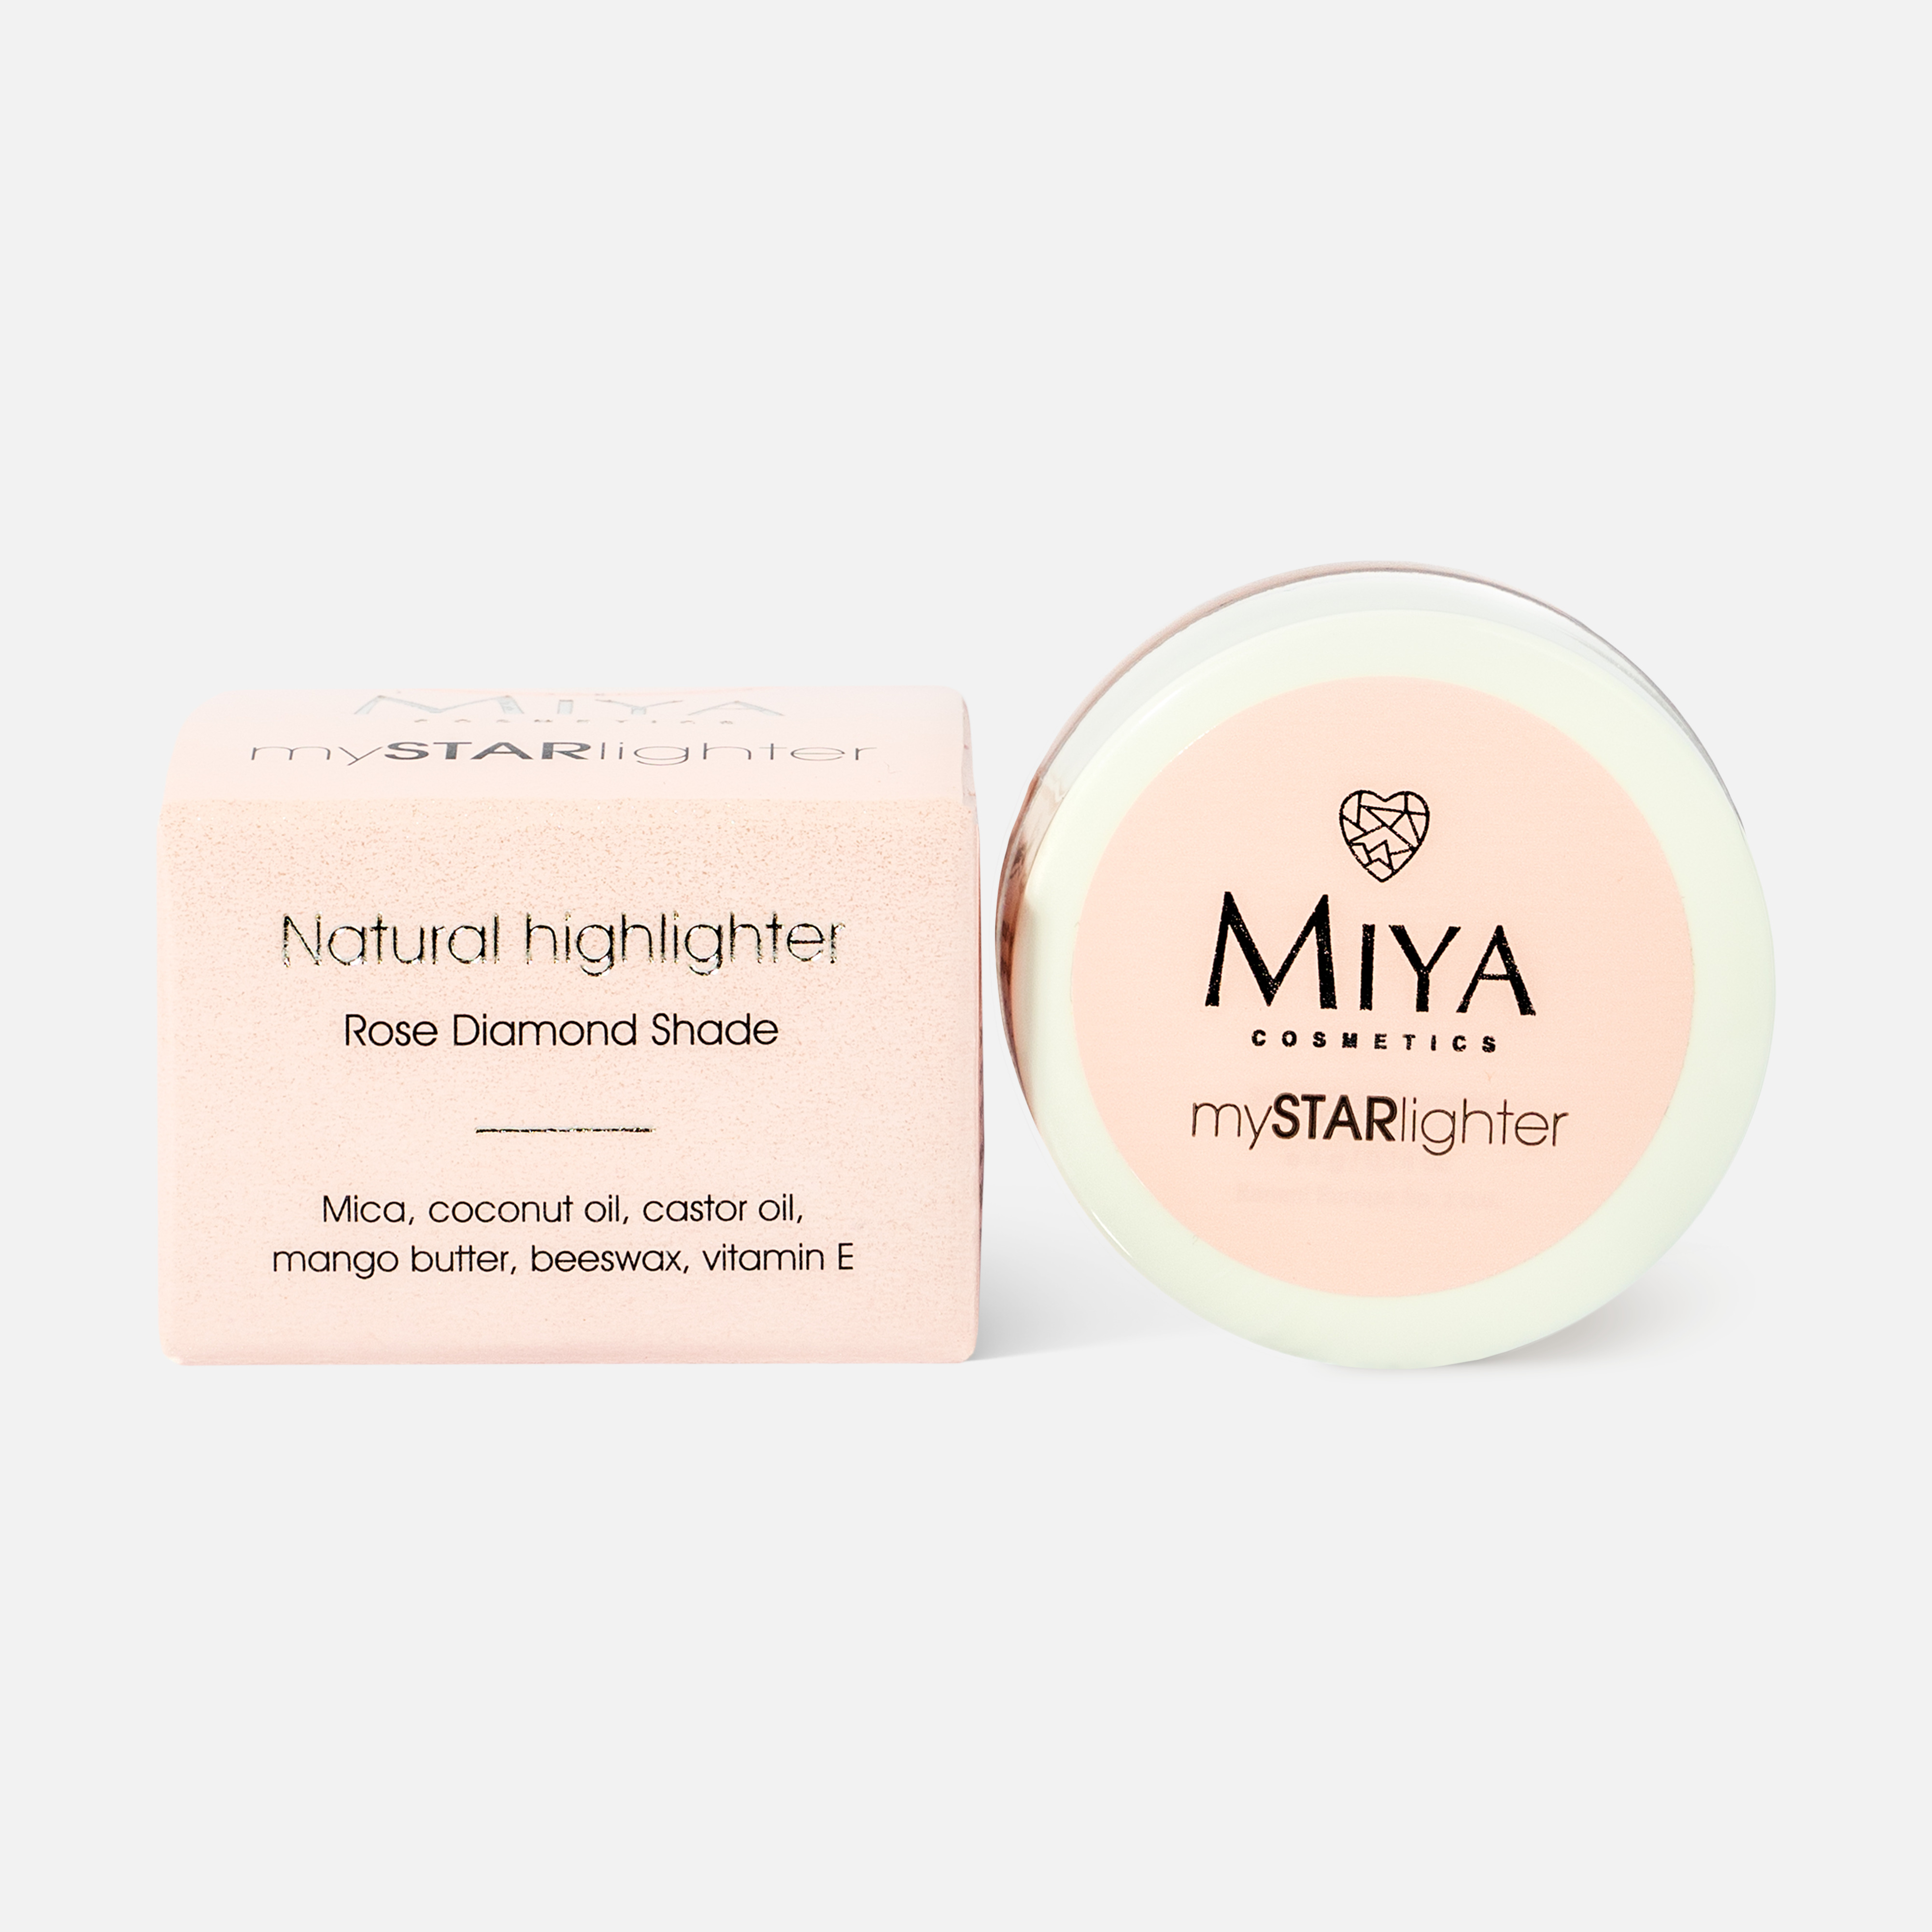 Хайлайтер для лица Miya cosmetics Mystarlighter Rose Diamond, 4 г воск декоративный таир хайлайтер 20 мл медь